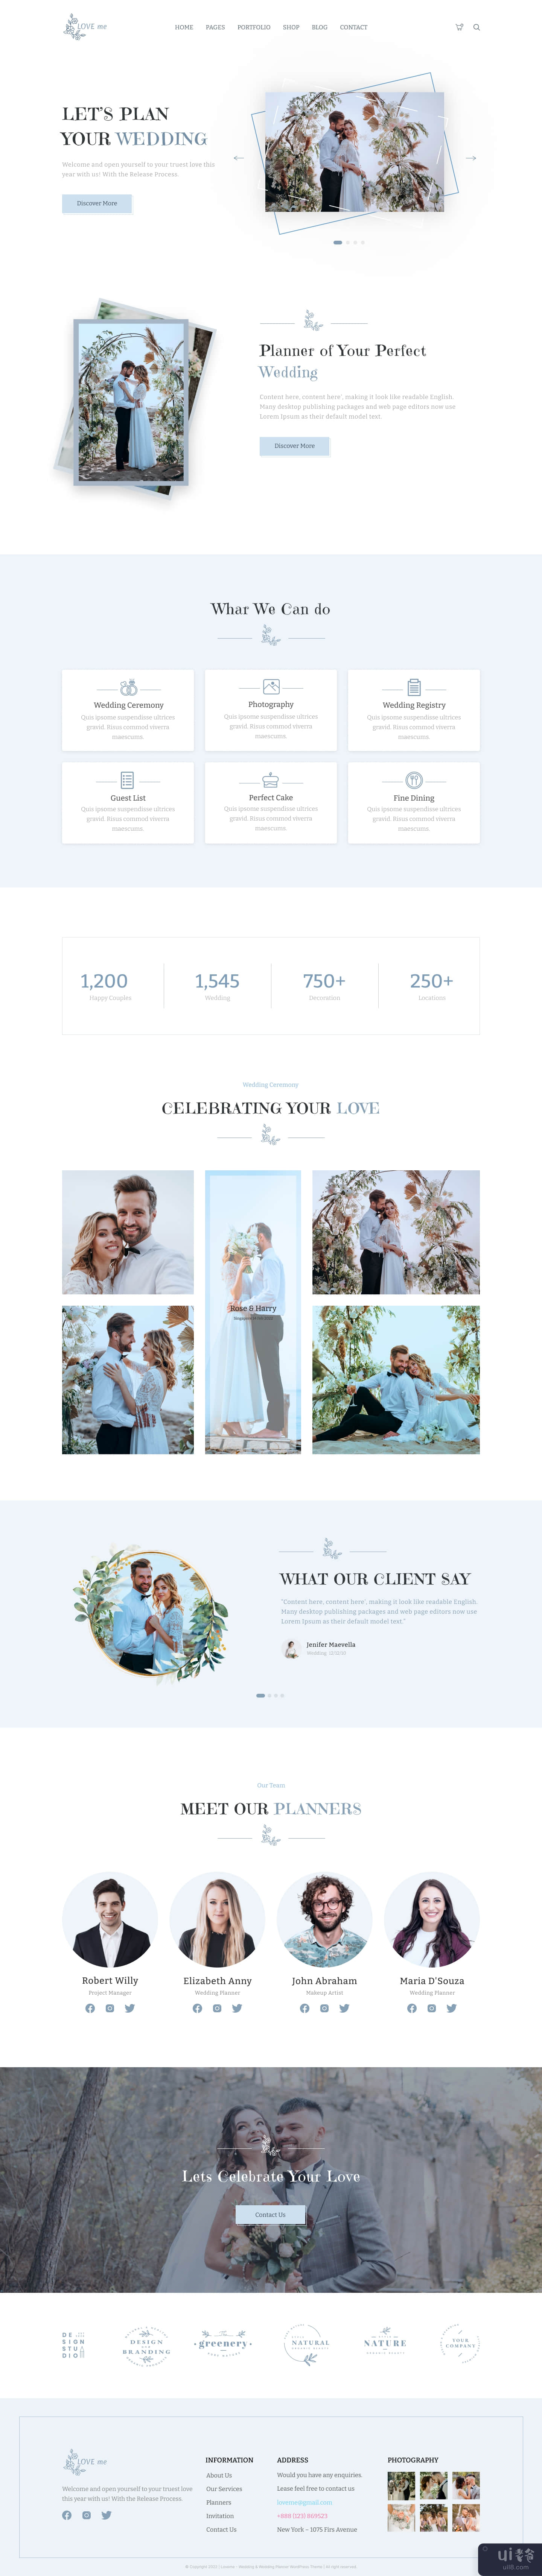 婚礼和婚礼策划师登陆页面(Wedding & Wedding Planner landing page)插图